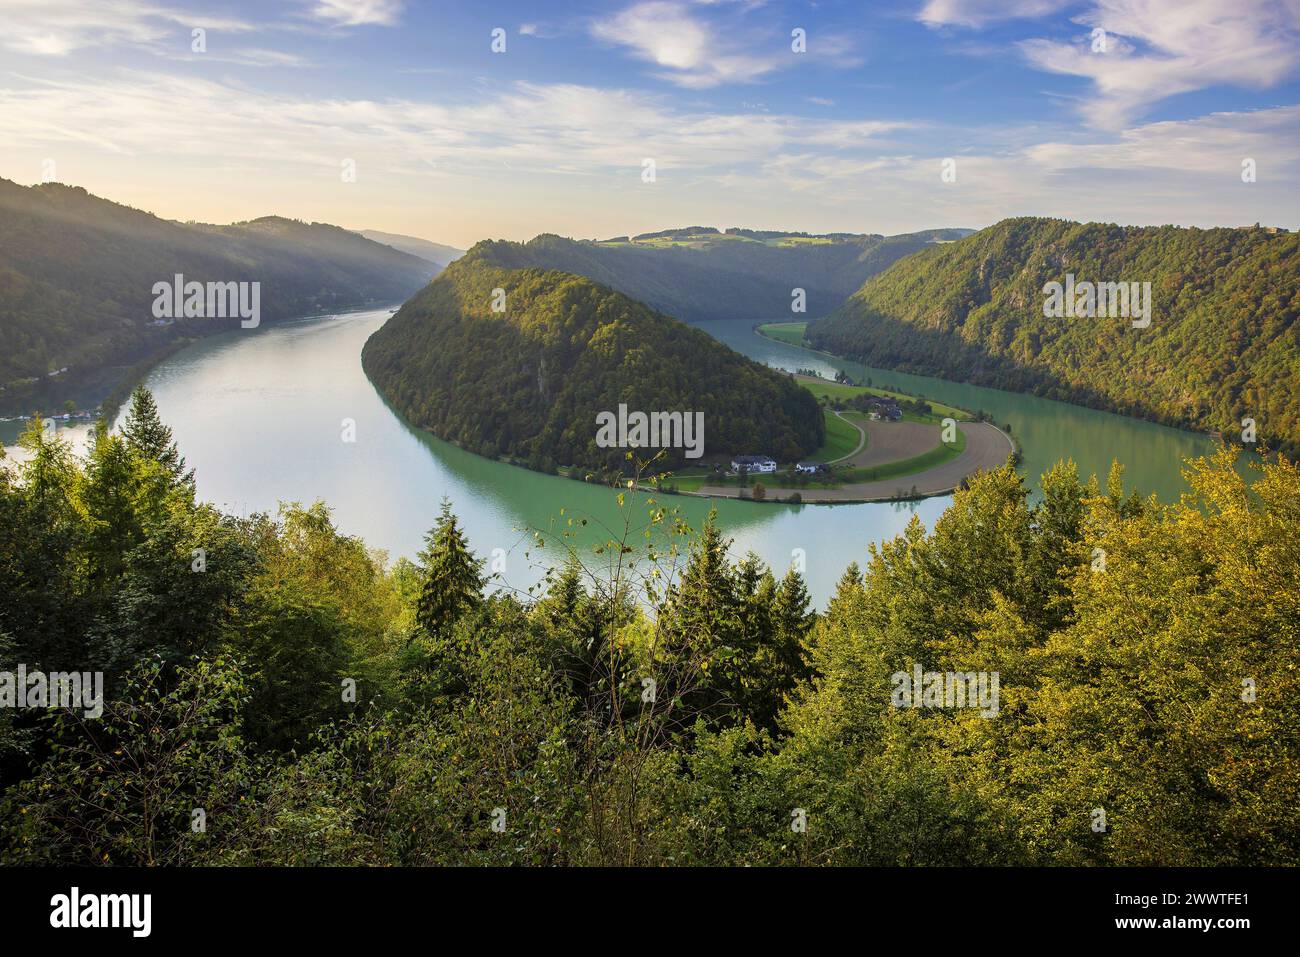 Schloegener Schlinge, river loop of Danube, Austria, Upper Austria Stock Photo